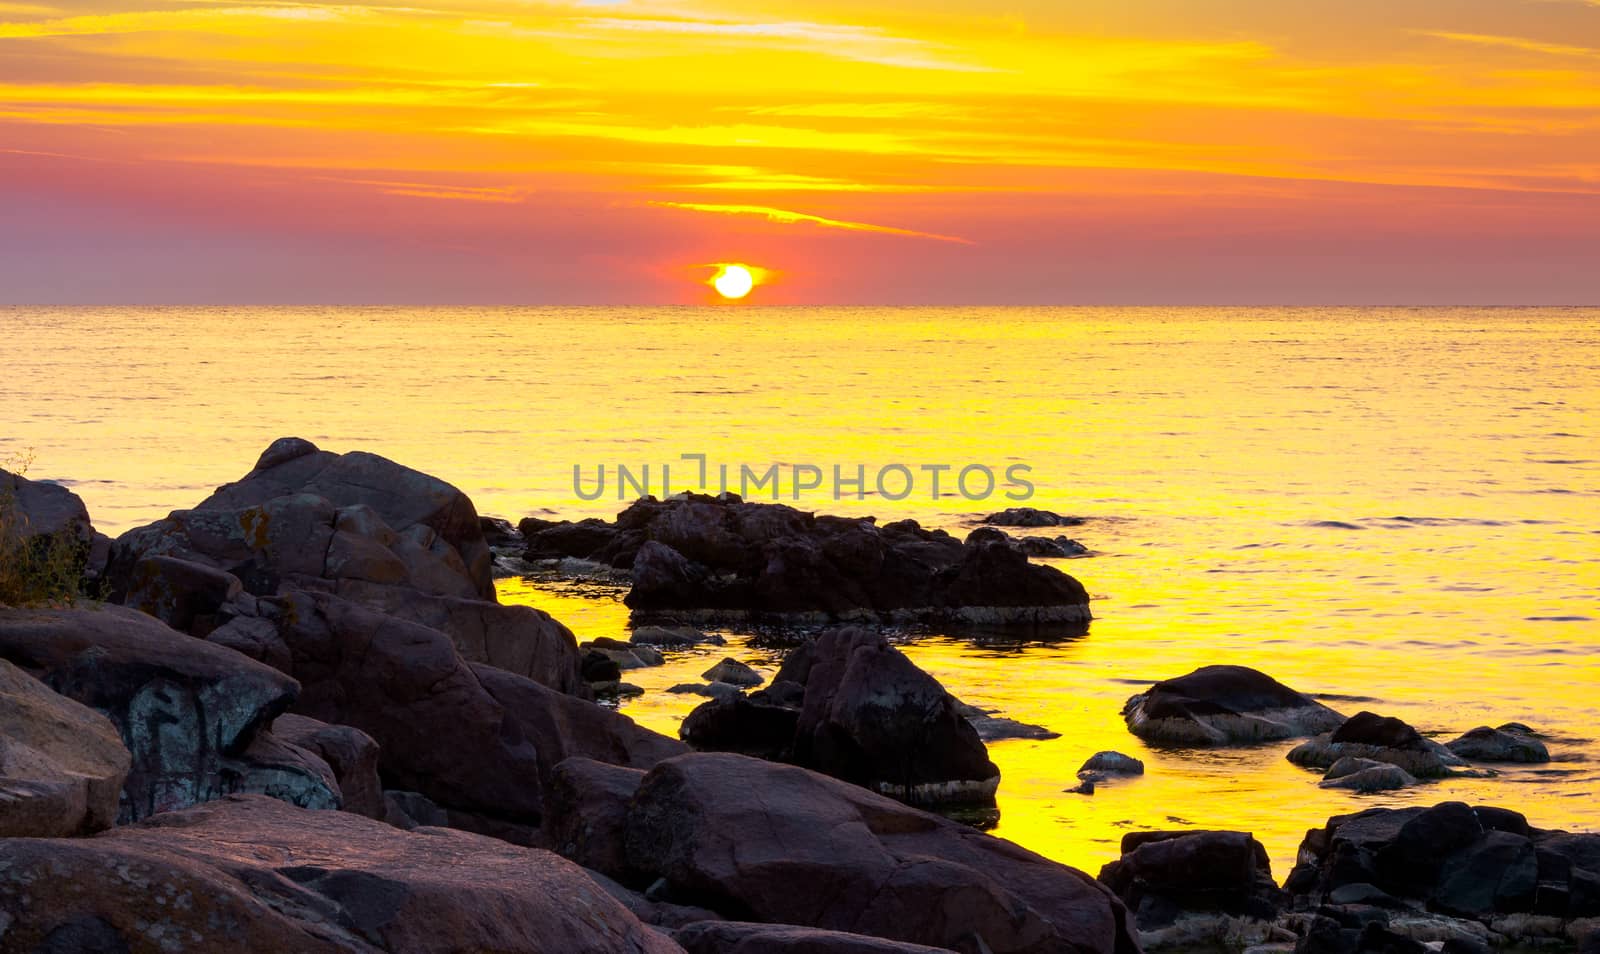 reddish sunrise over the sea with rocky shore by Pellinni